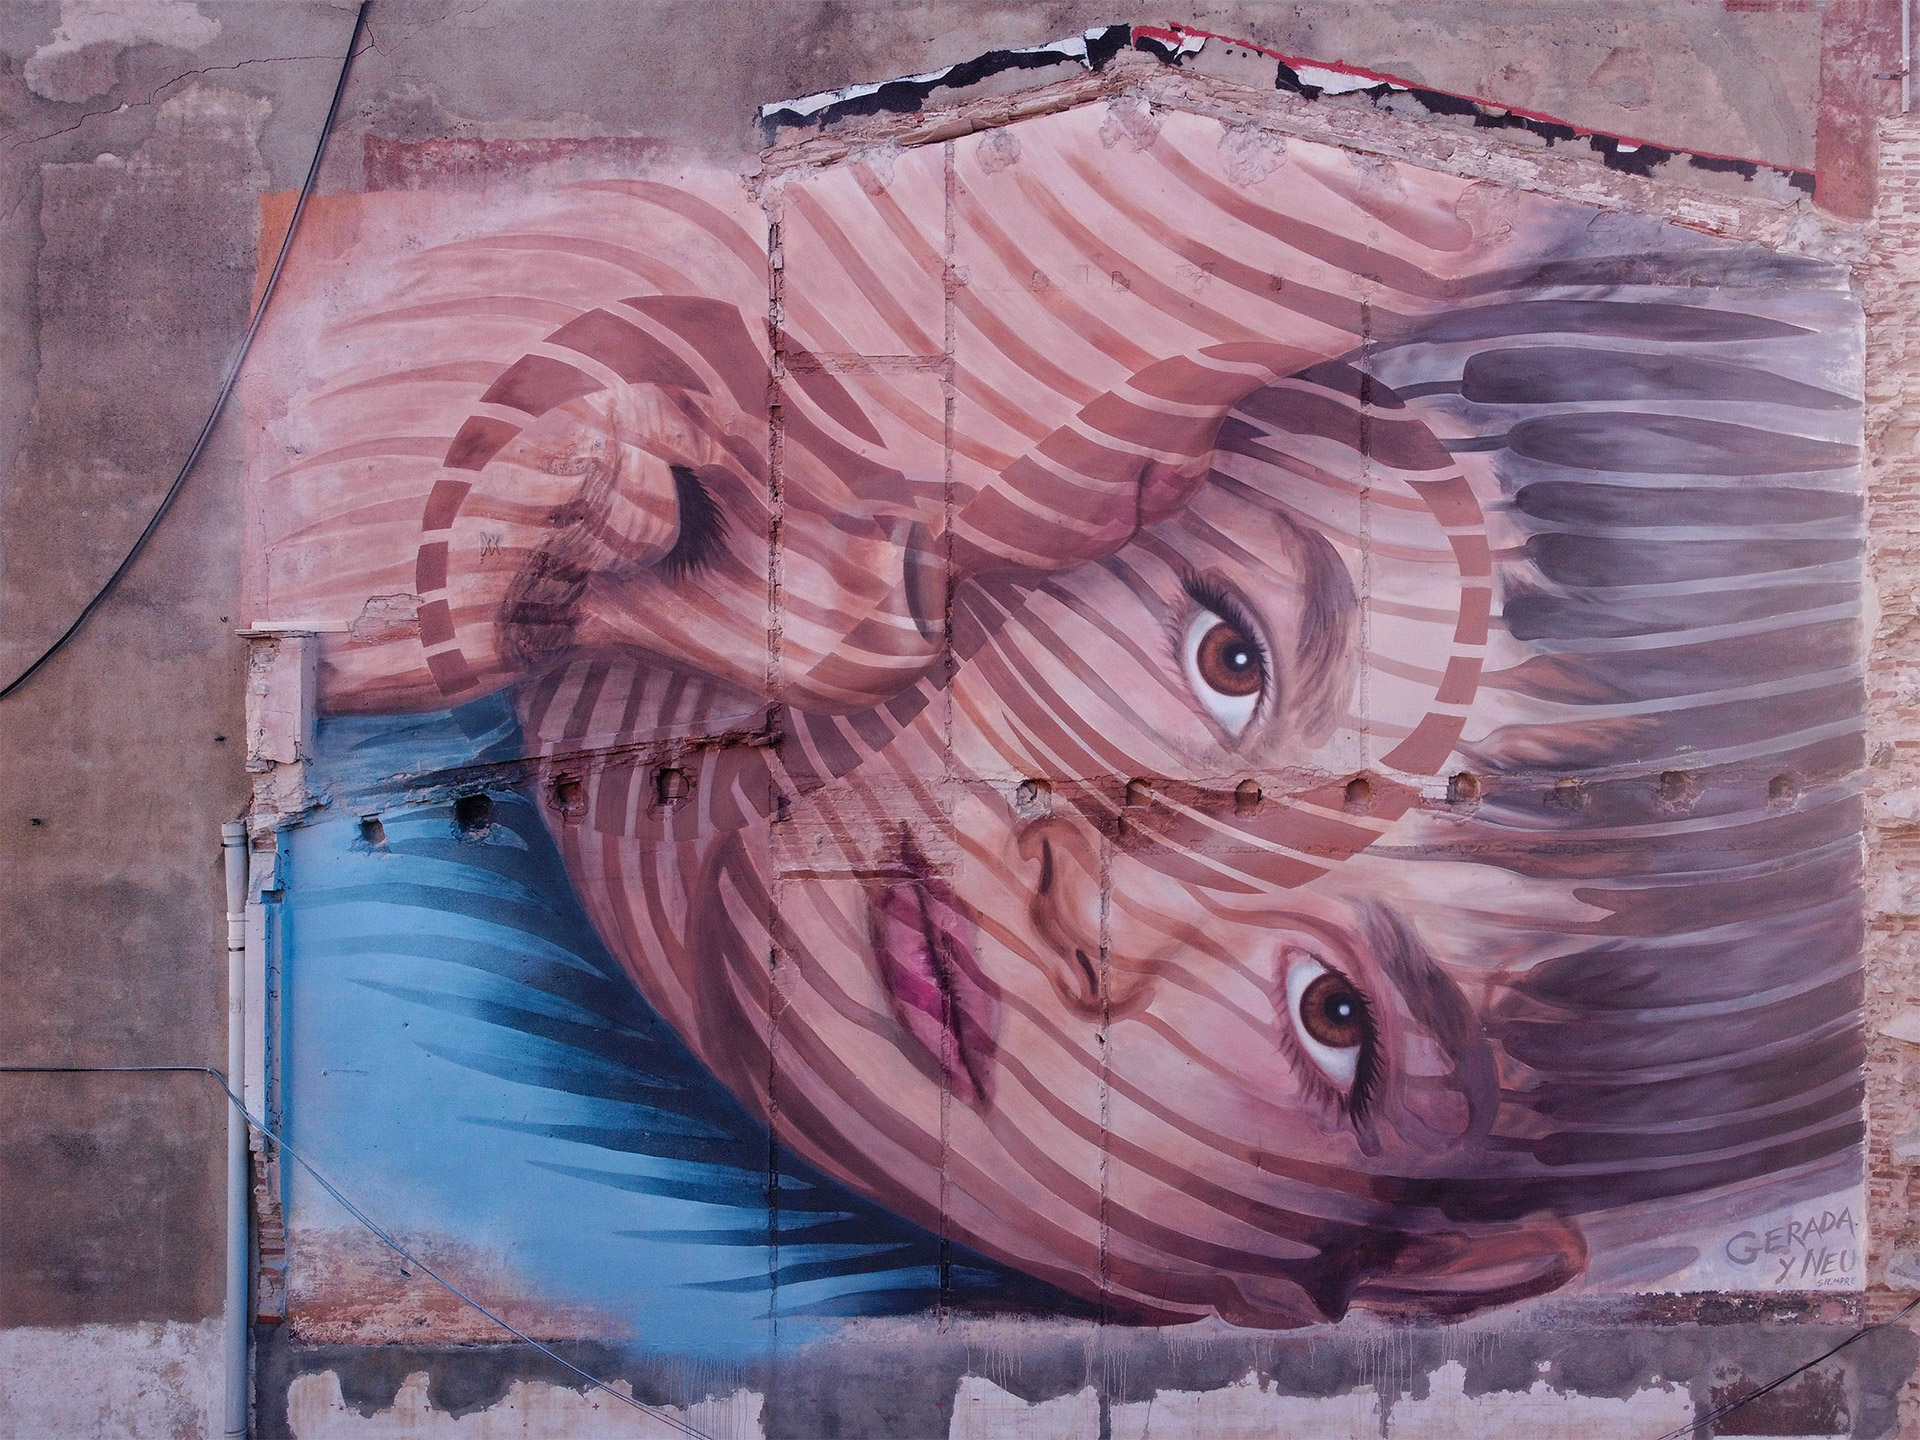 Jorge Rodriguez-Gerada大型街头艺术作品